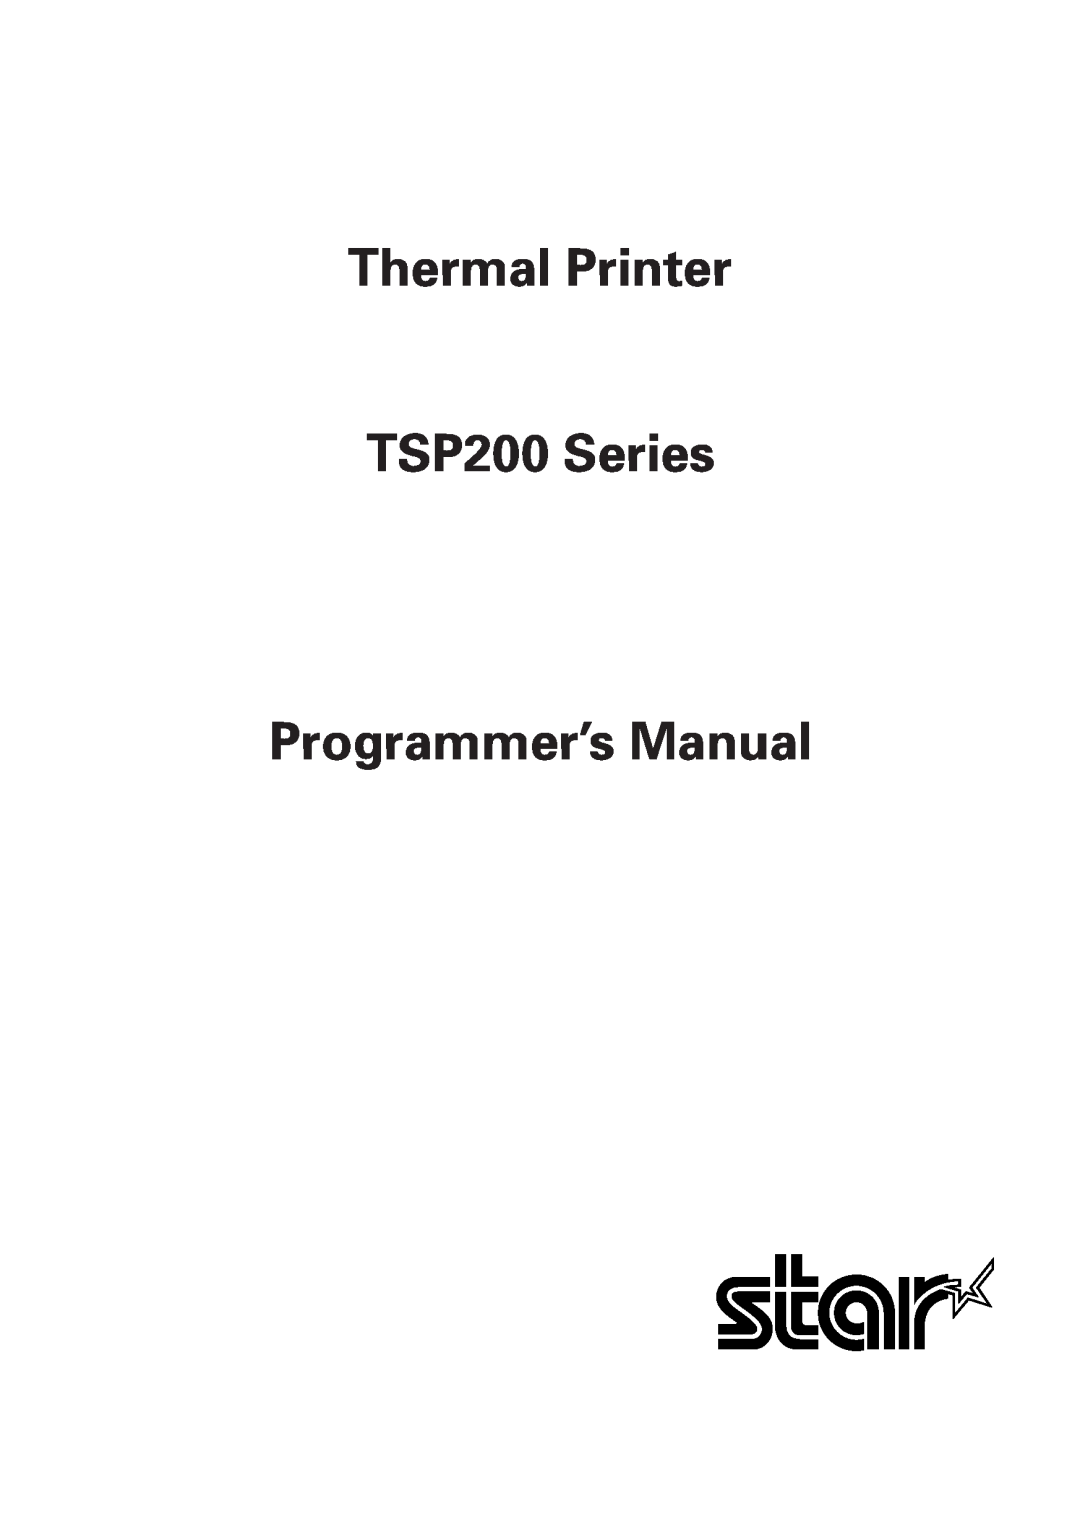 Star Micronics RS232 manual Thermal Printer TSP200 Series Programmer’s Manual 